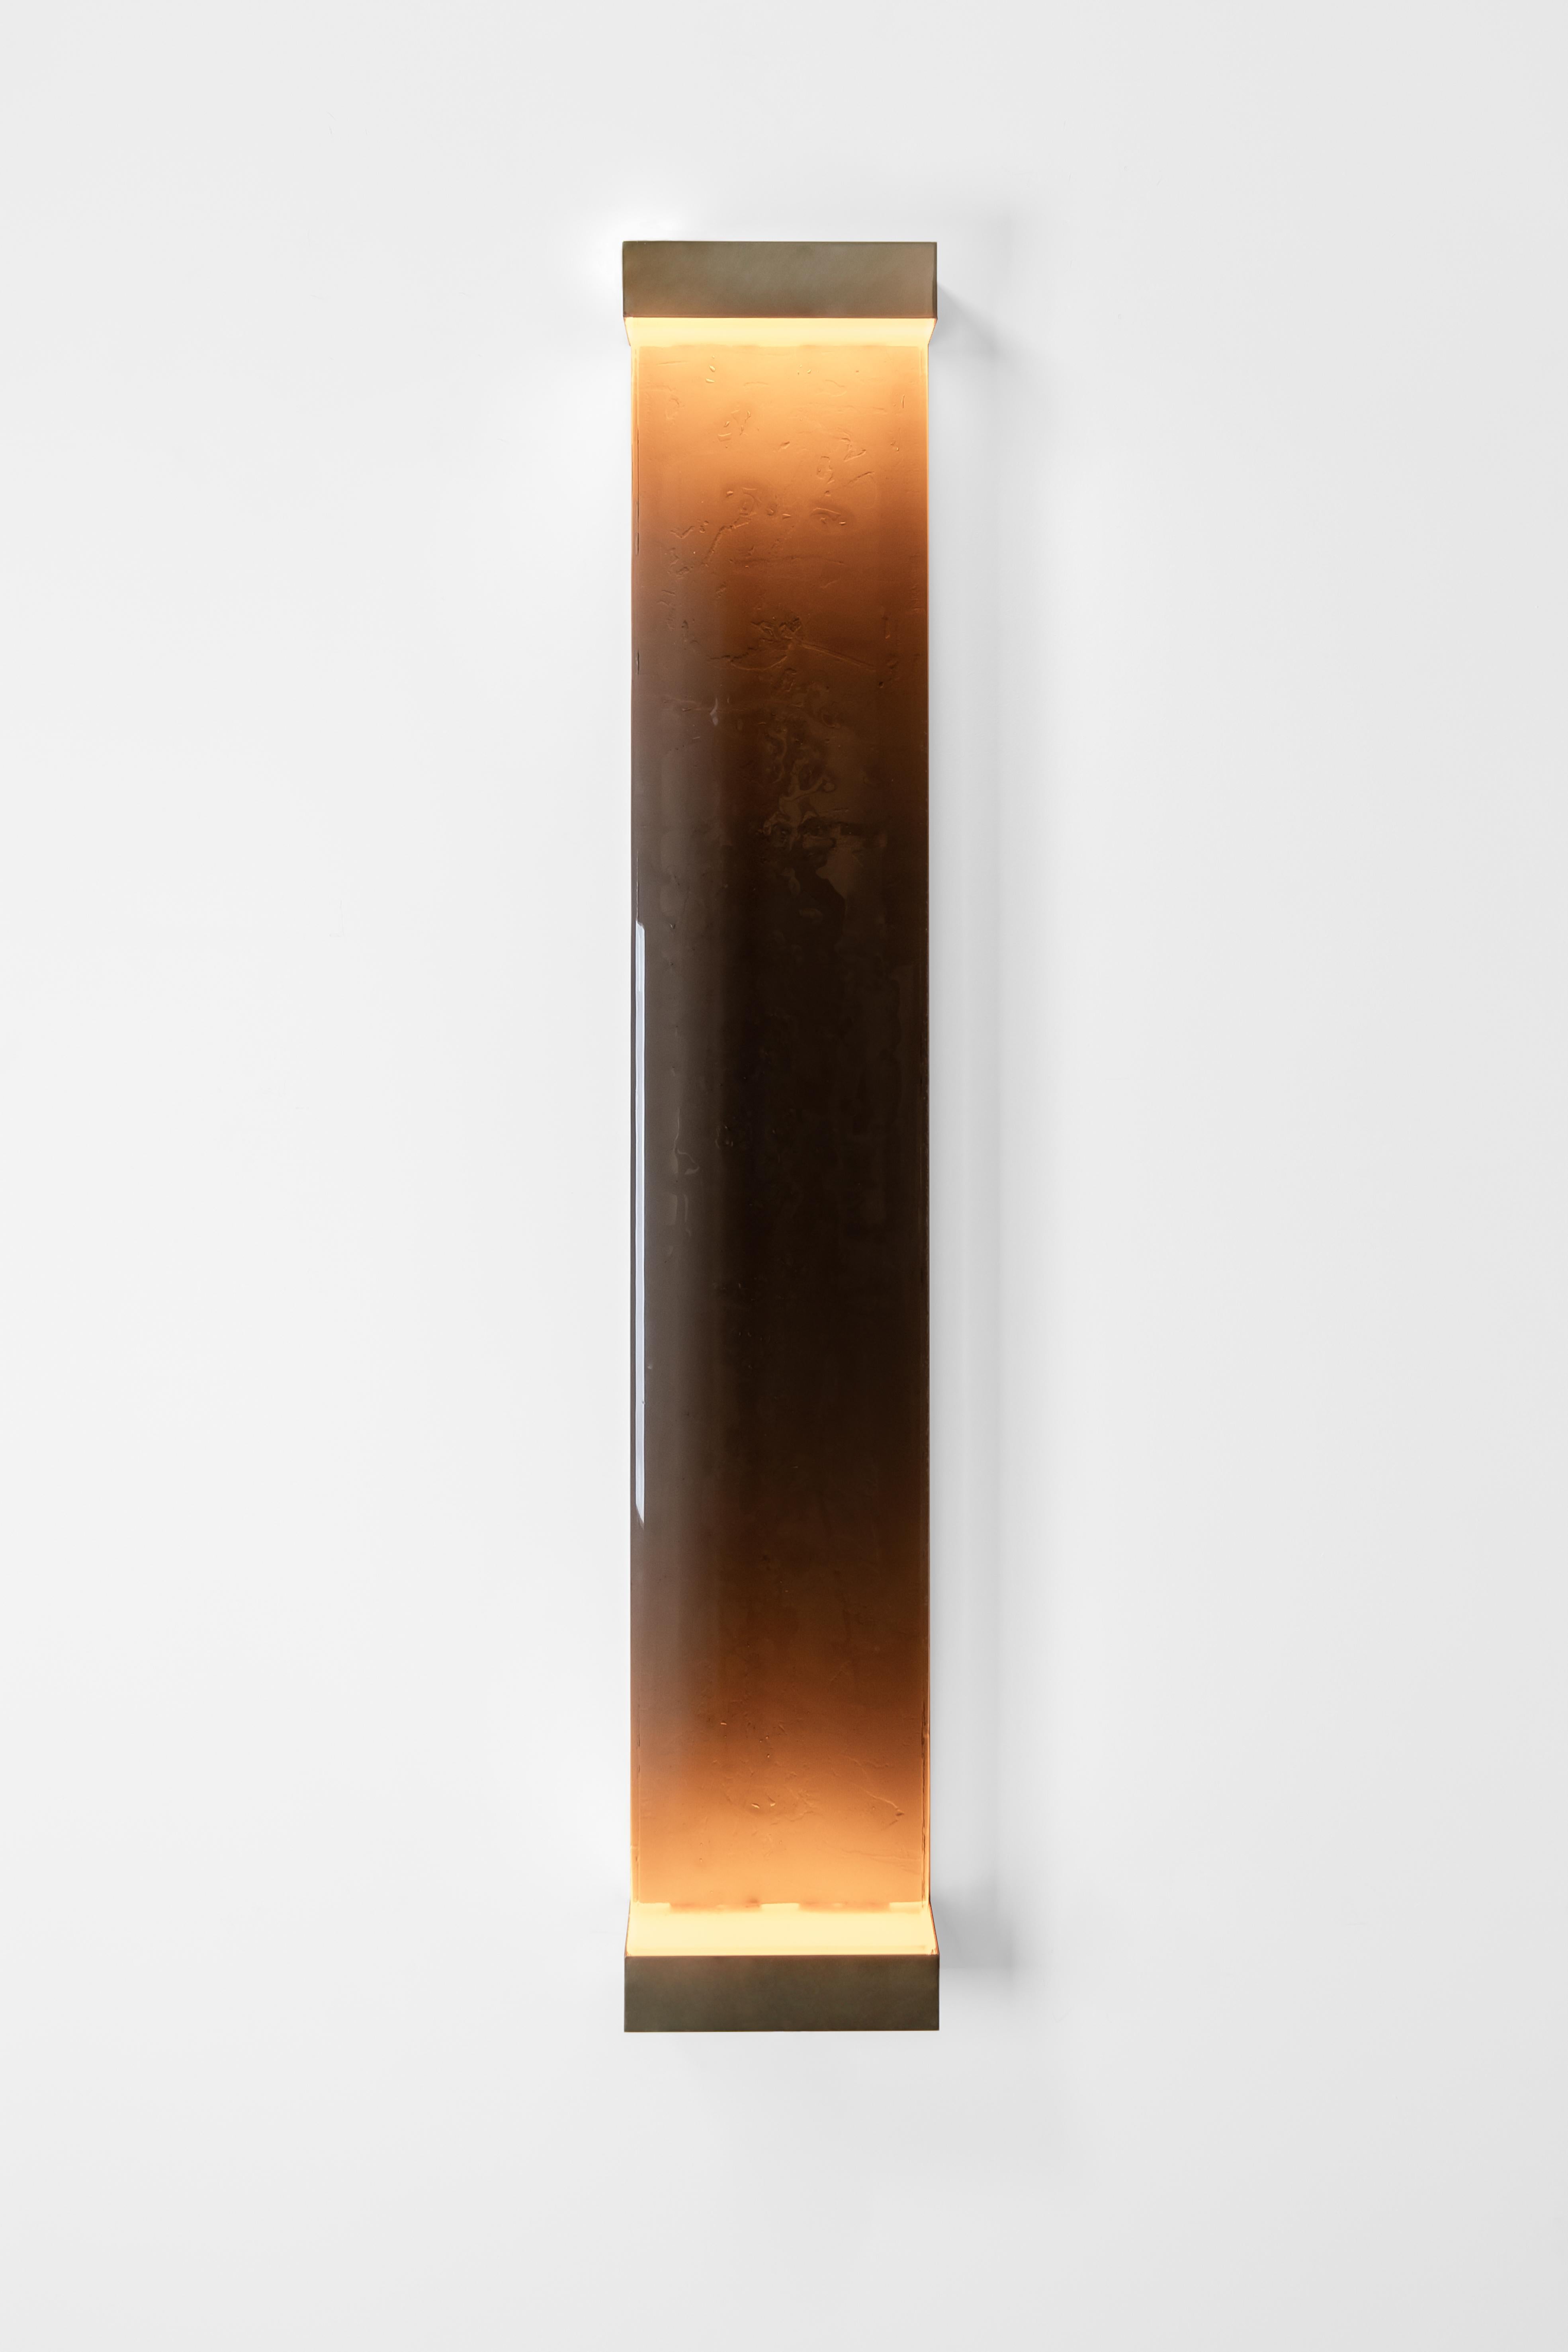 Jud Wall Lamp by Draga & Aurel For Sale 2